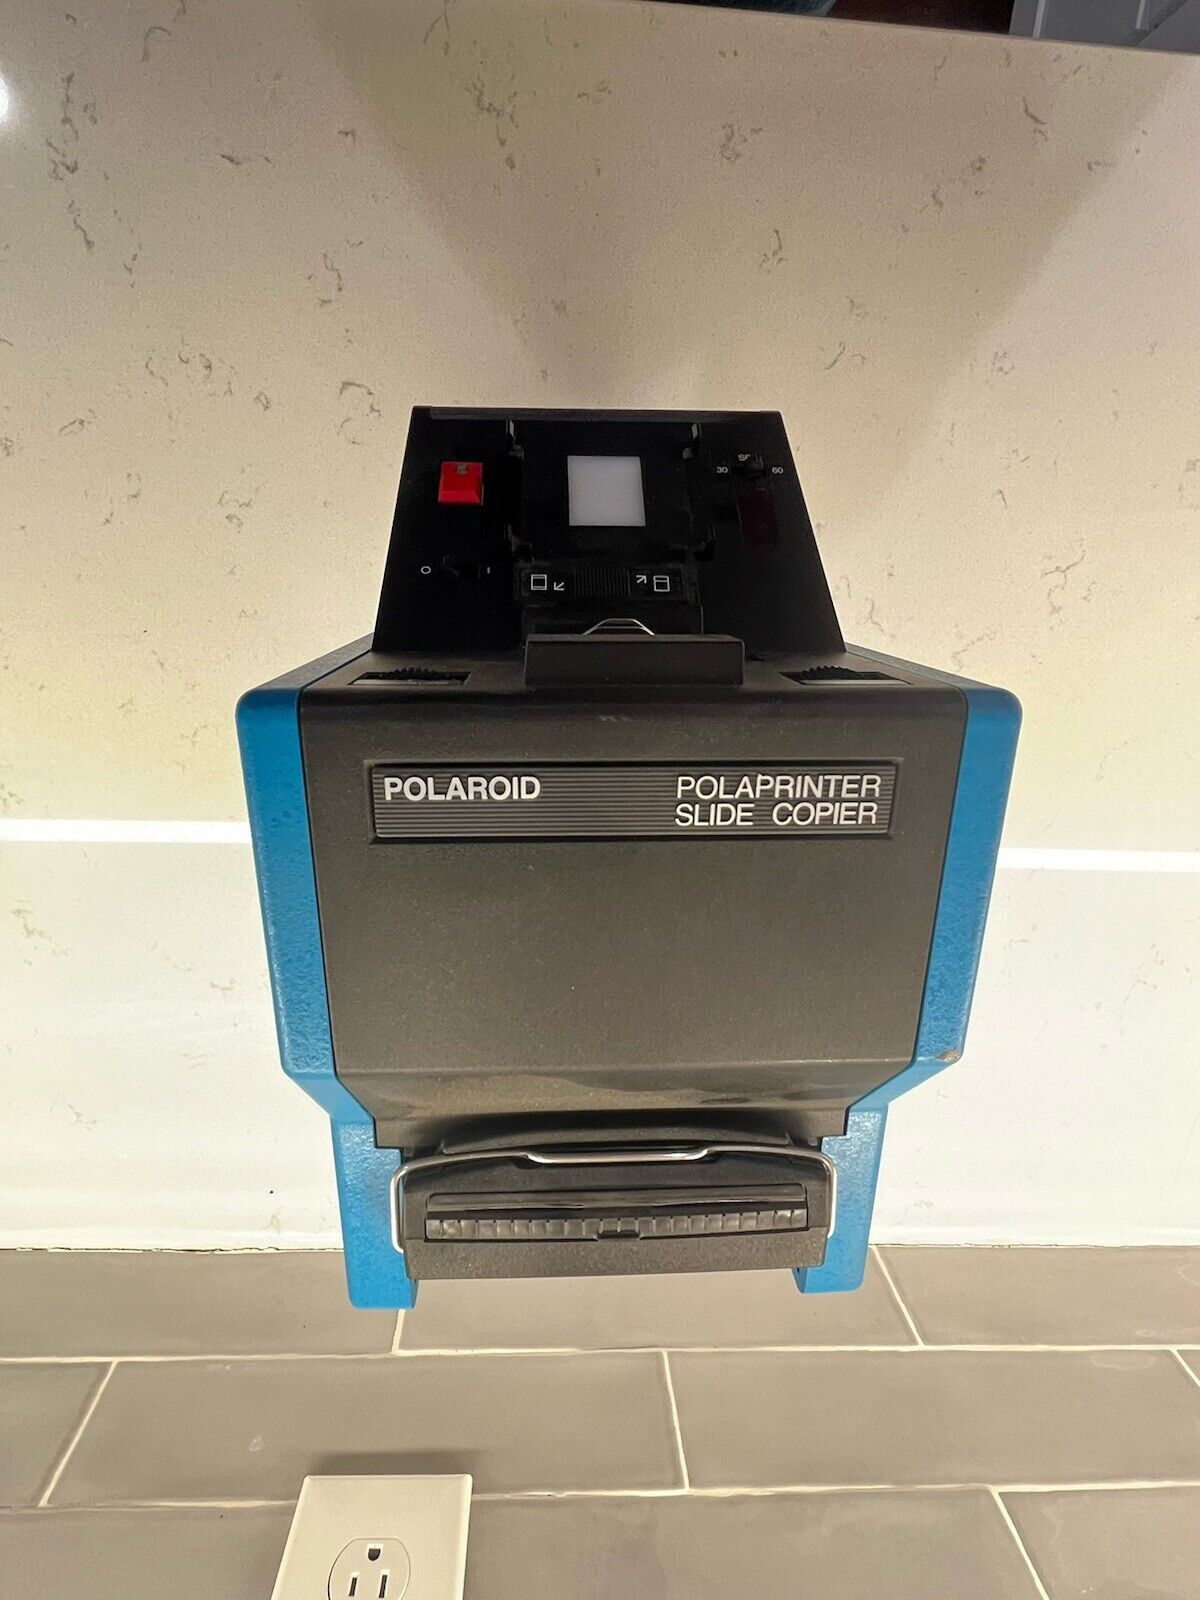 Vintage Polaroid PolaPrinter Slide Copier model 3510 duplicator multi volt